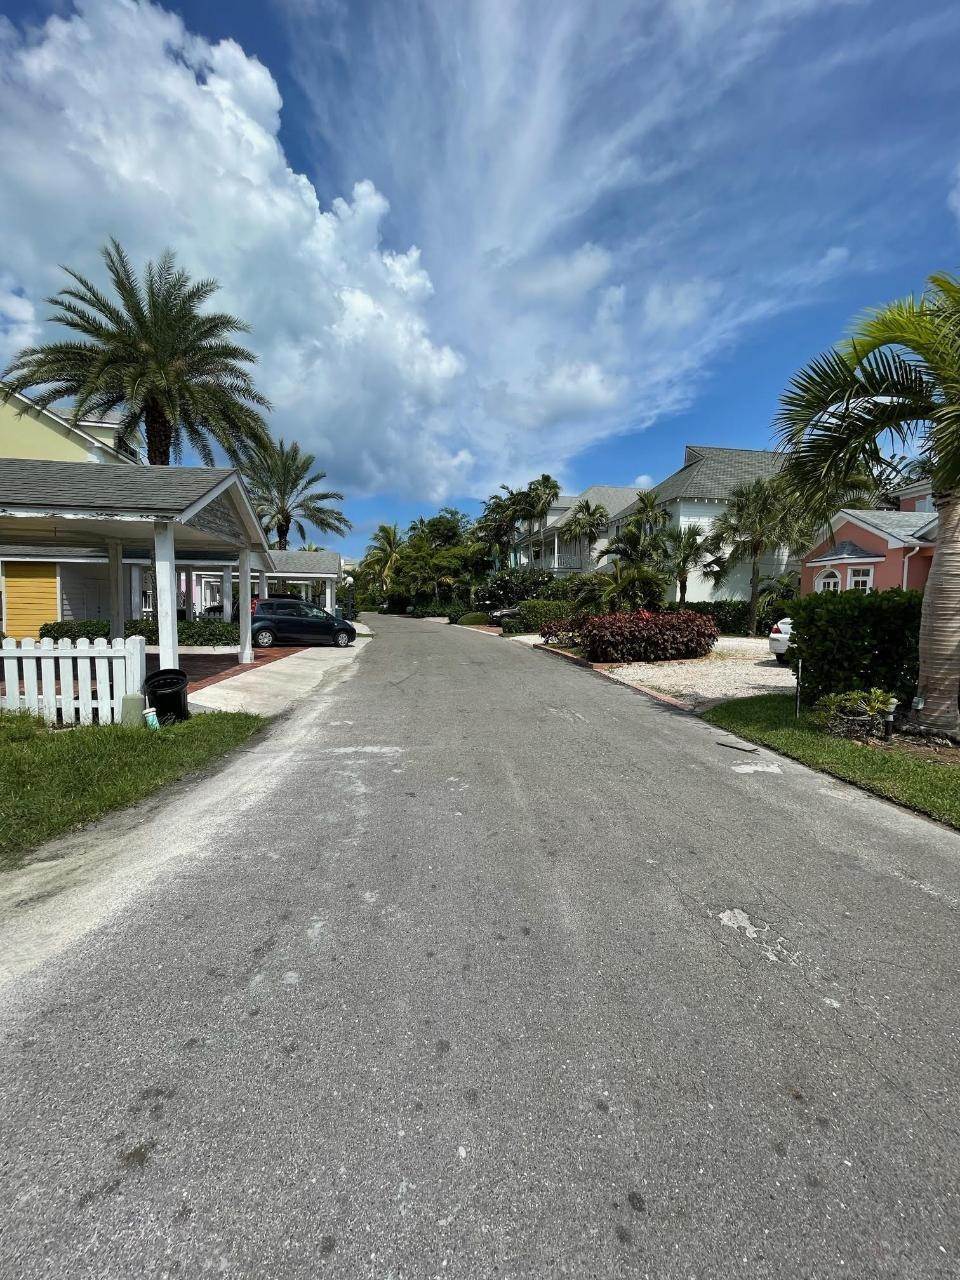 6. Lots / Acreage for Sale at West Bay Street, Nassau and Paradise Island, Bahamas